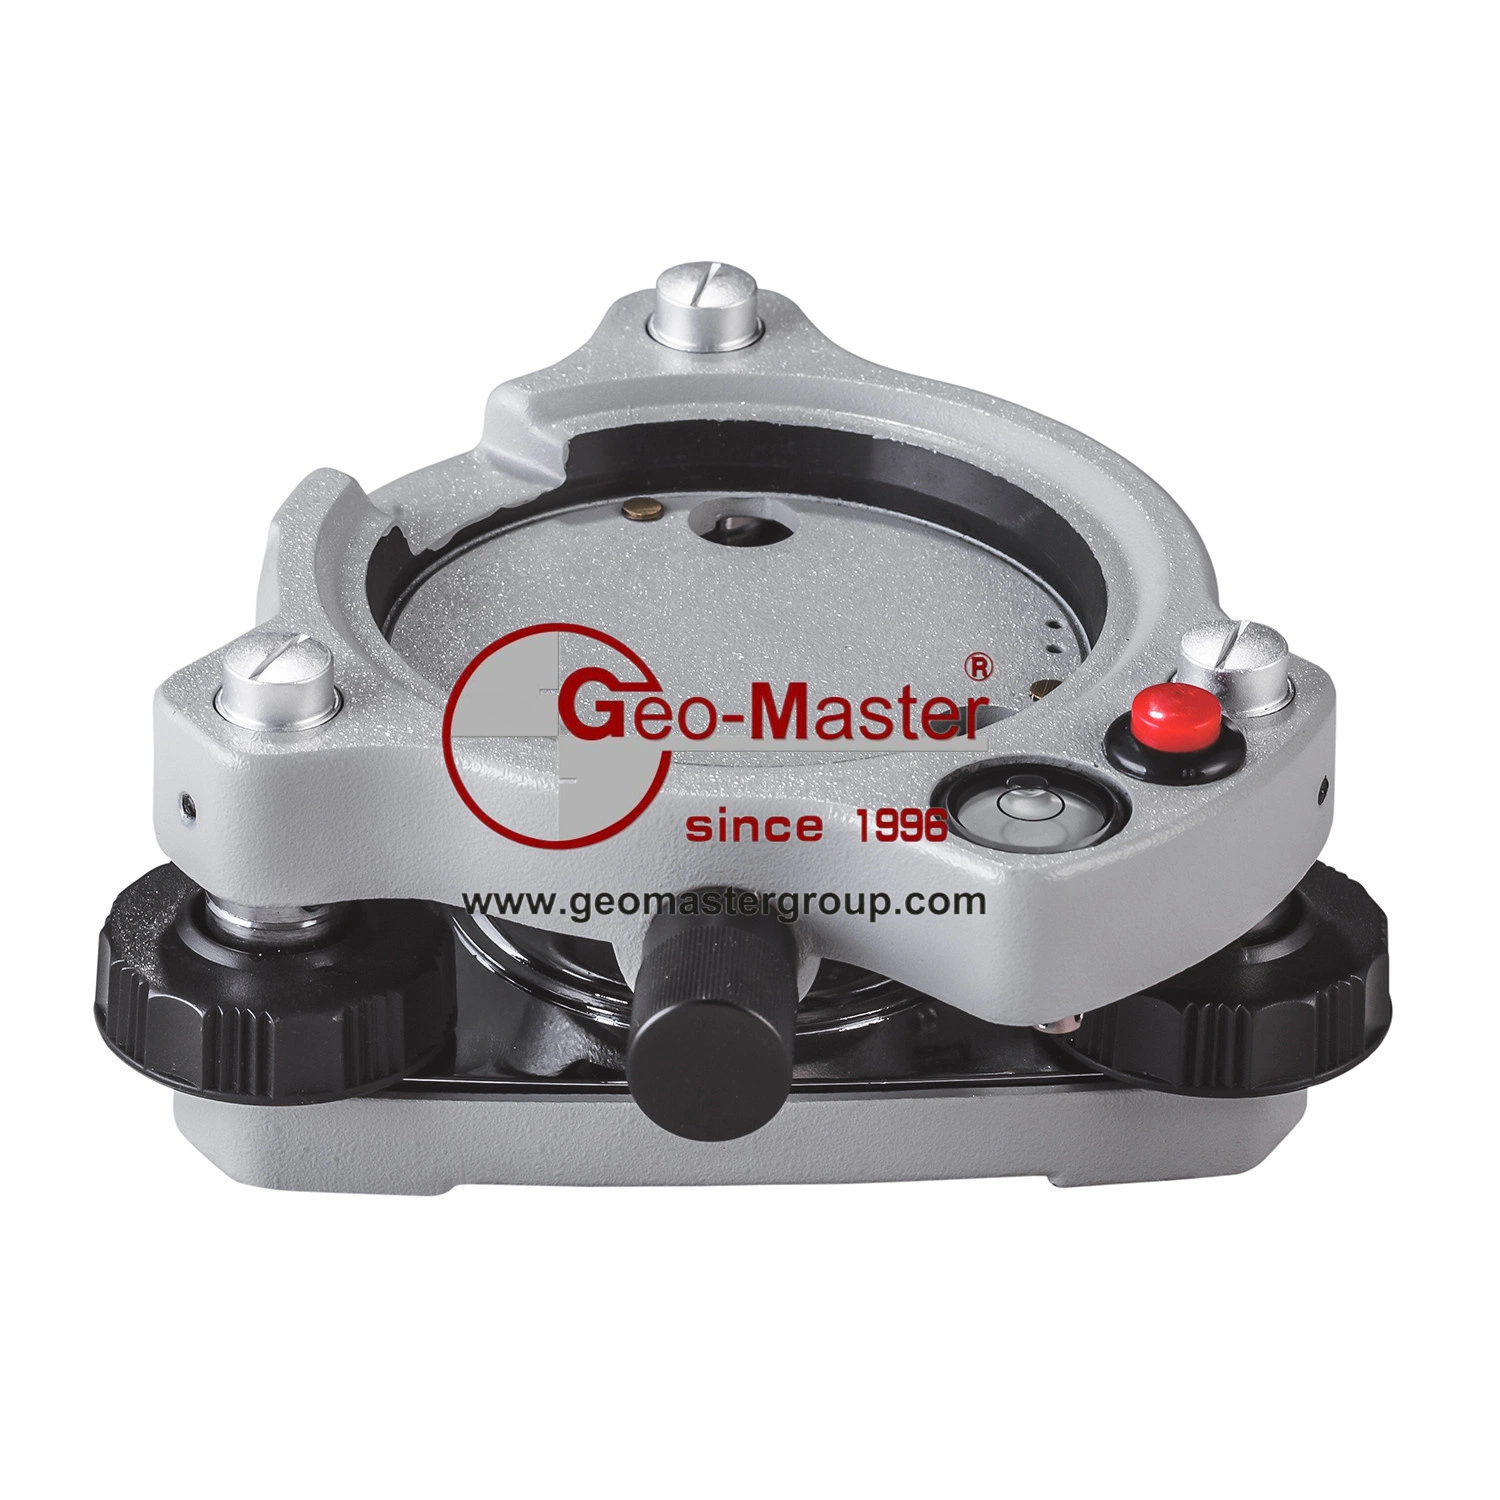 Geomaster GPS & Prism Tribrach W. Laser Plummet for Surveying Instruments